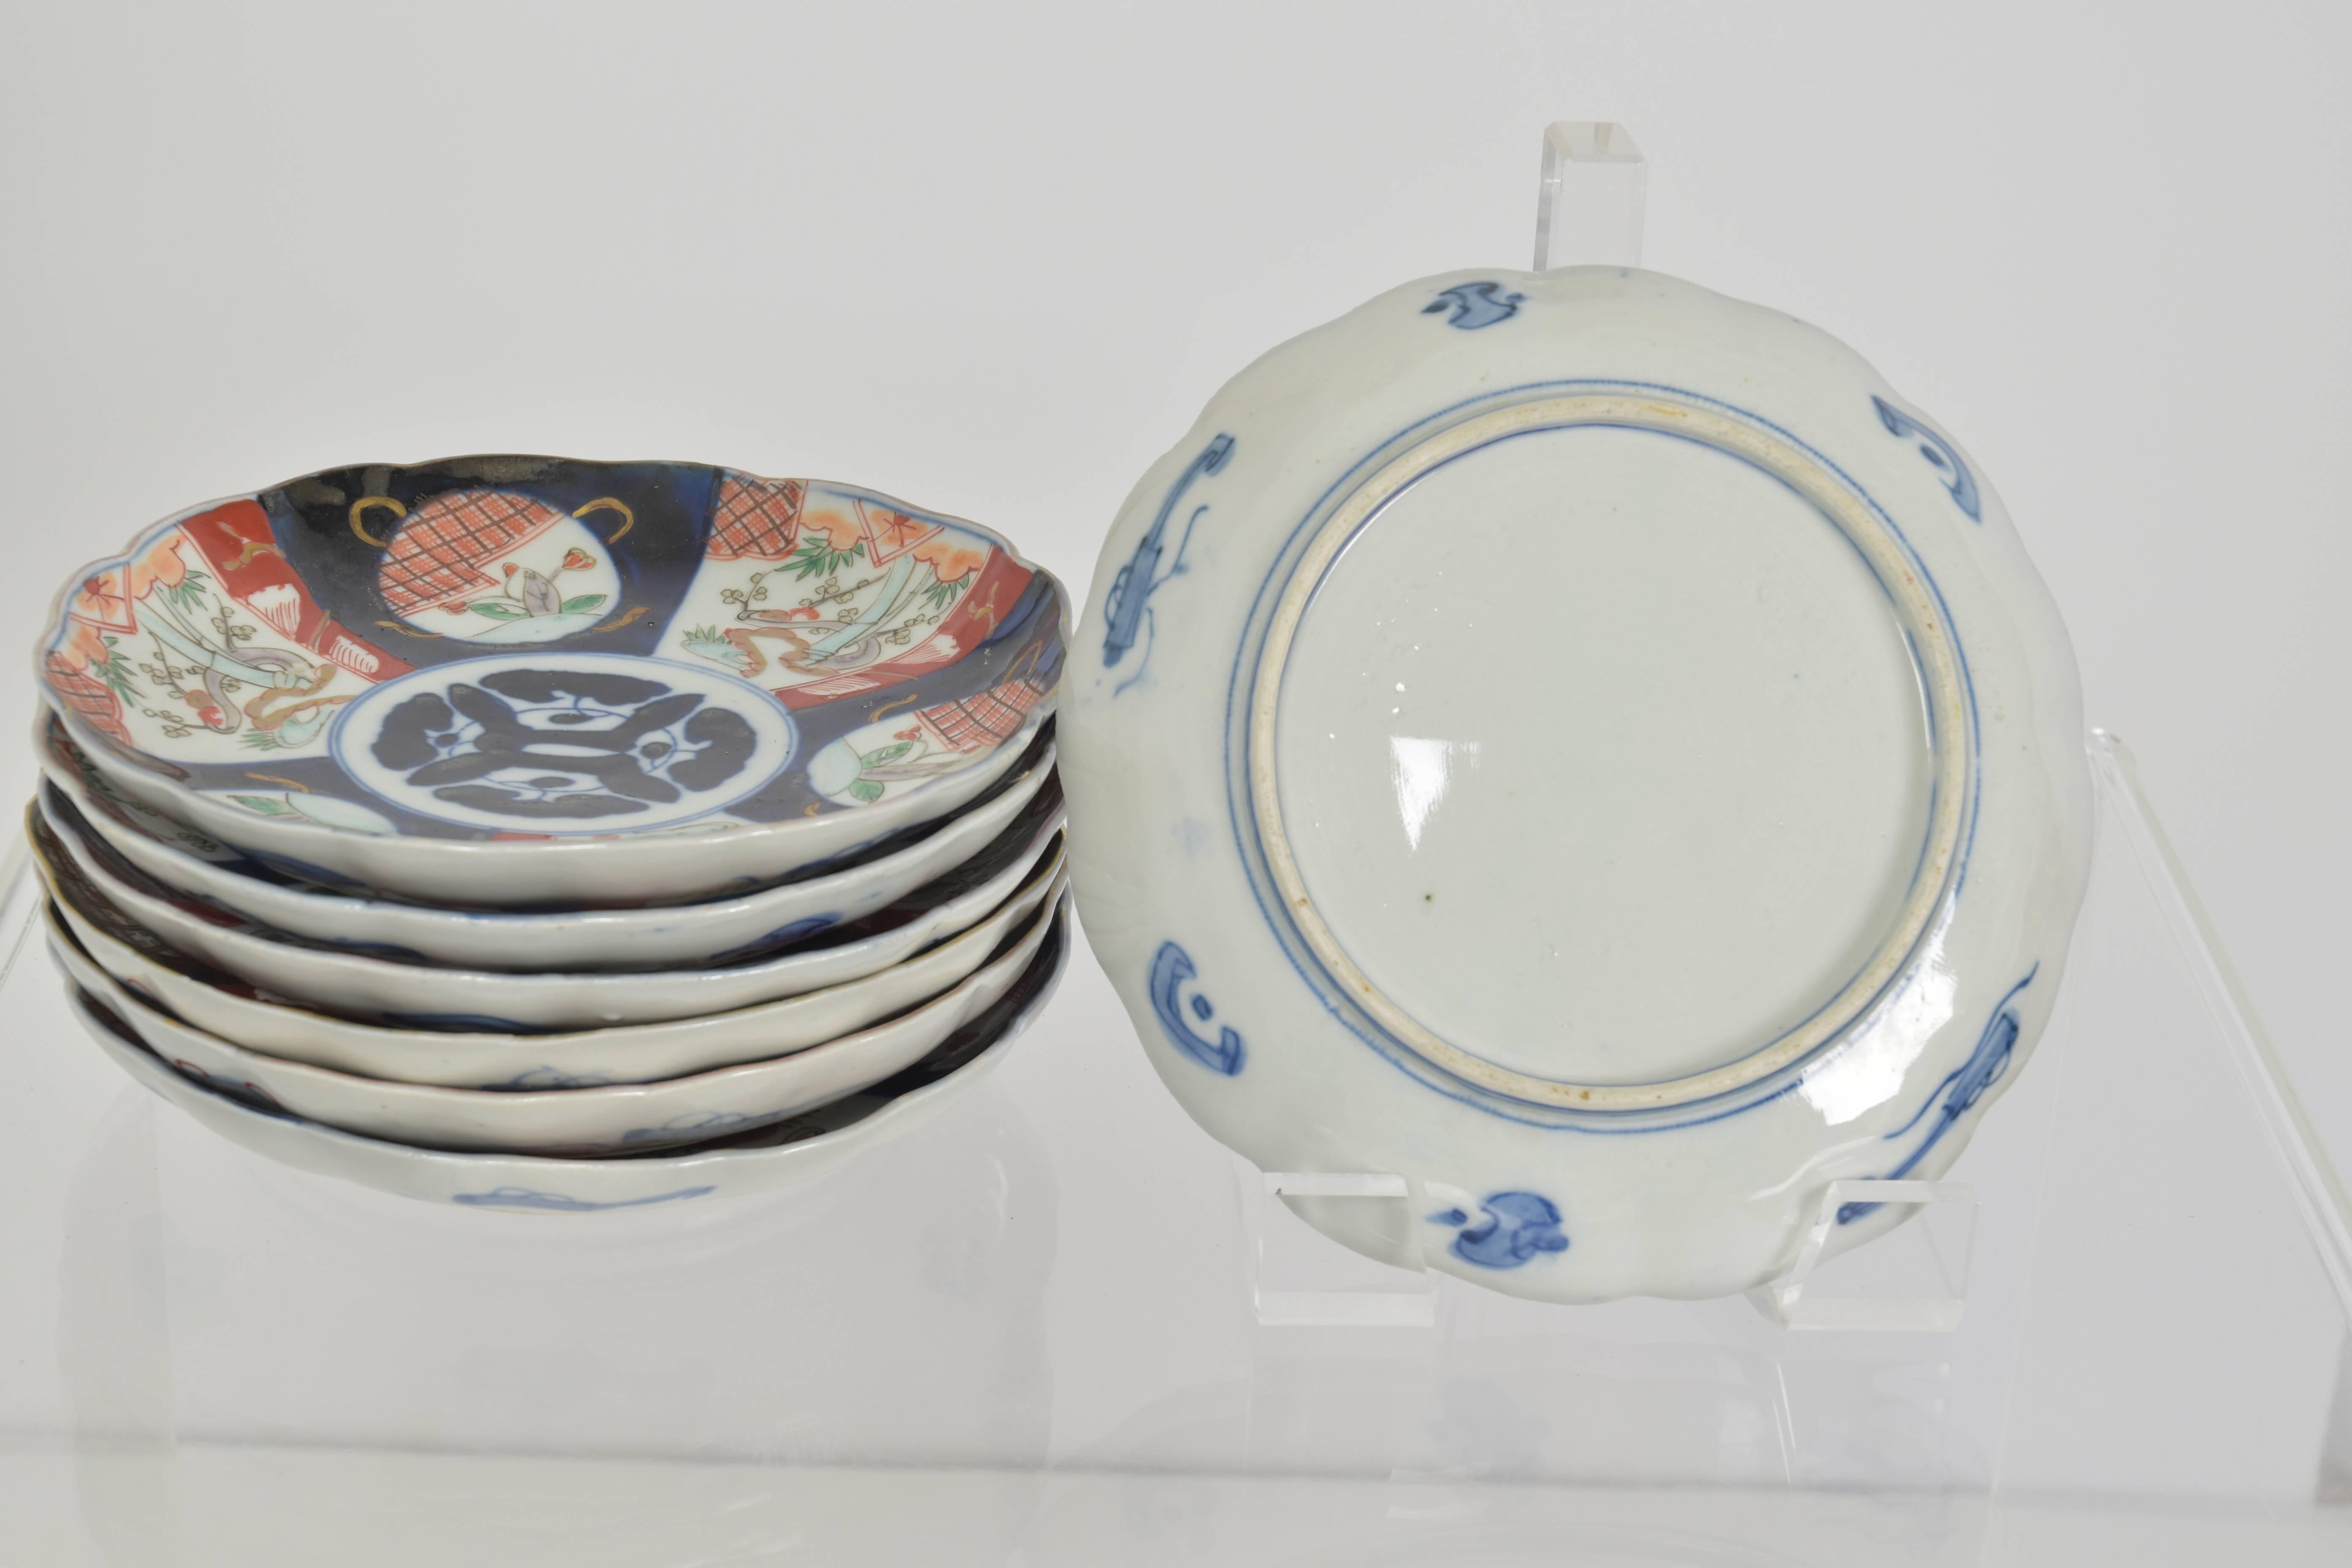 Collection of seven hand-painted Imari porcelain decorative plates.